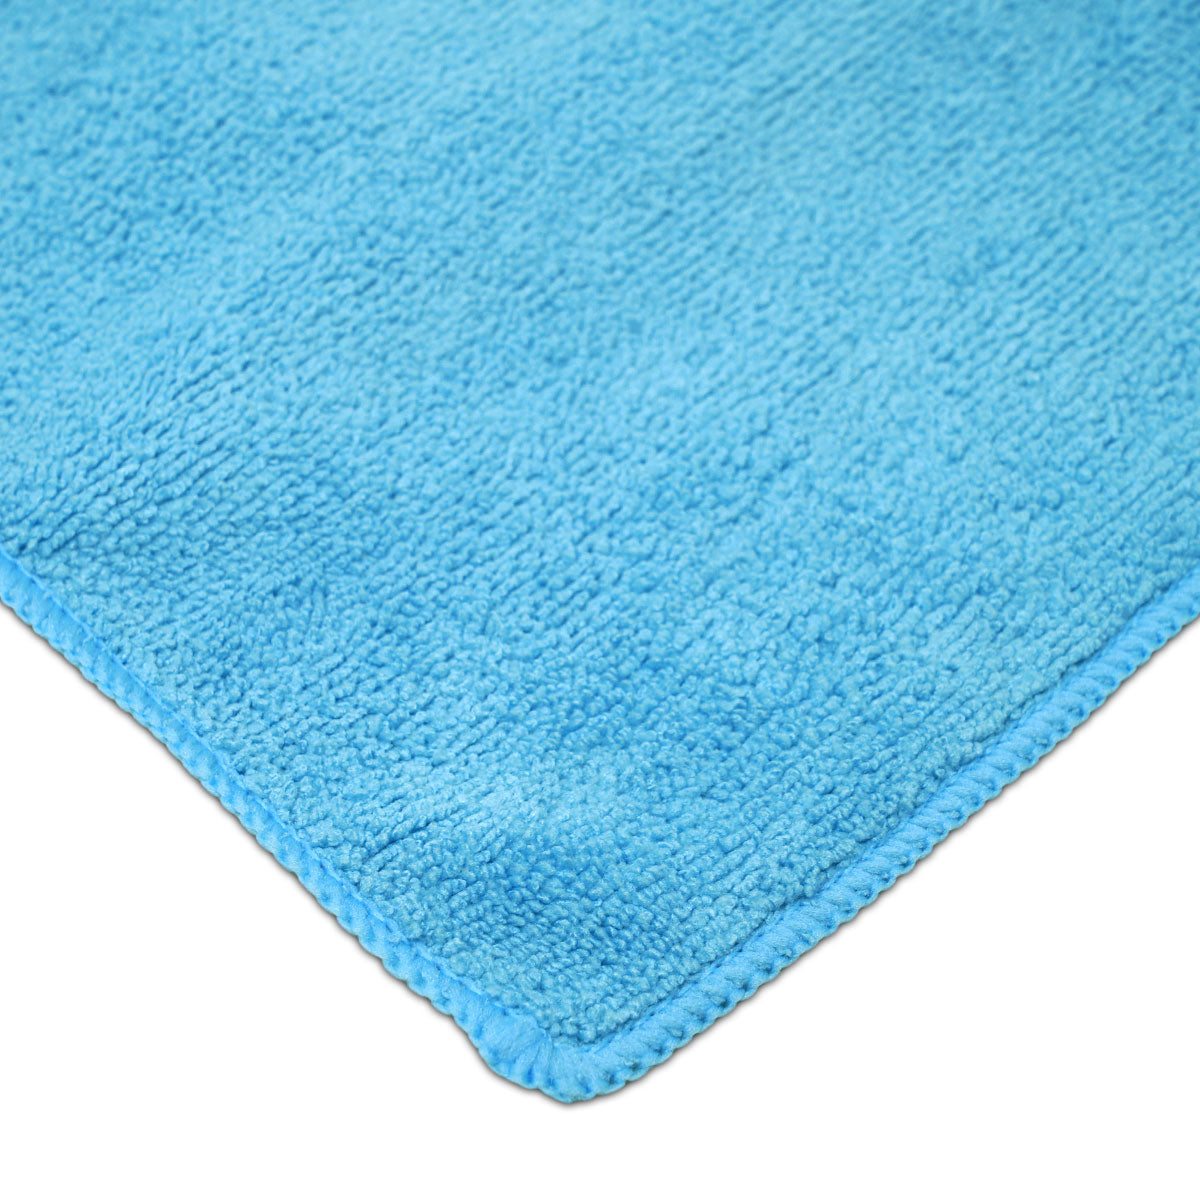 The Rag Company Edged 365 Premium All-Purpose 16 x 16 Microfiber Terry Towel - Light Blue